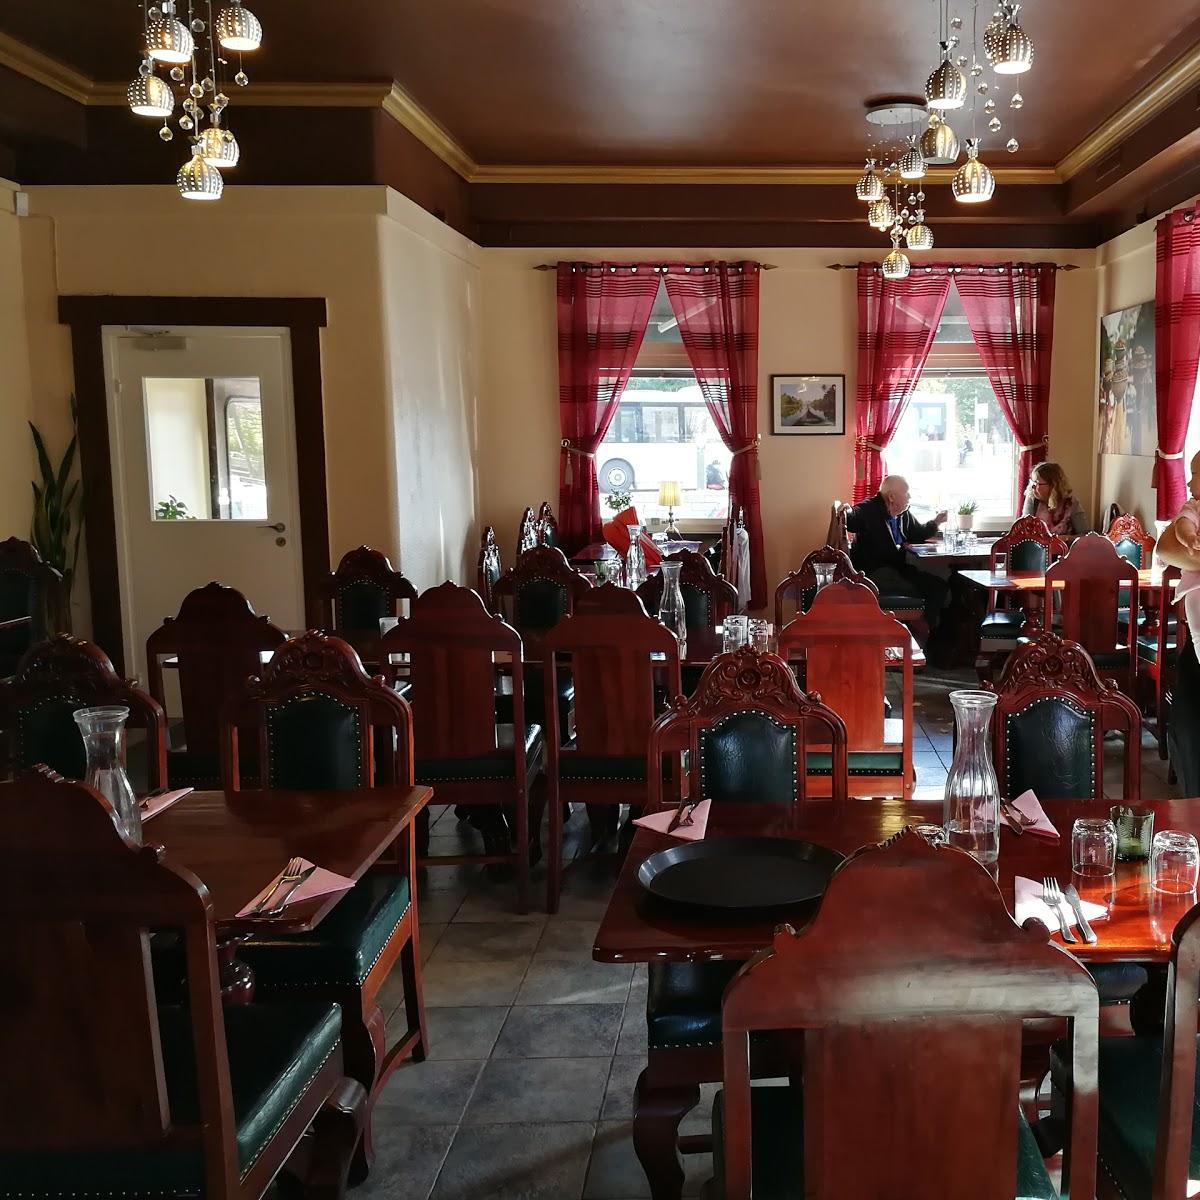 Restaurant "Restaurang Prashad" in Heberg